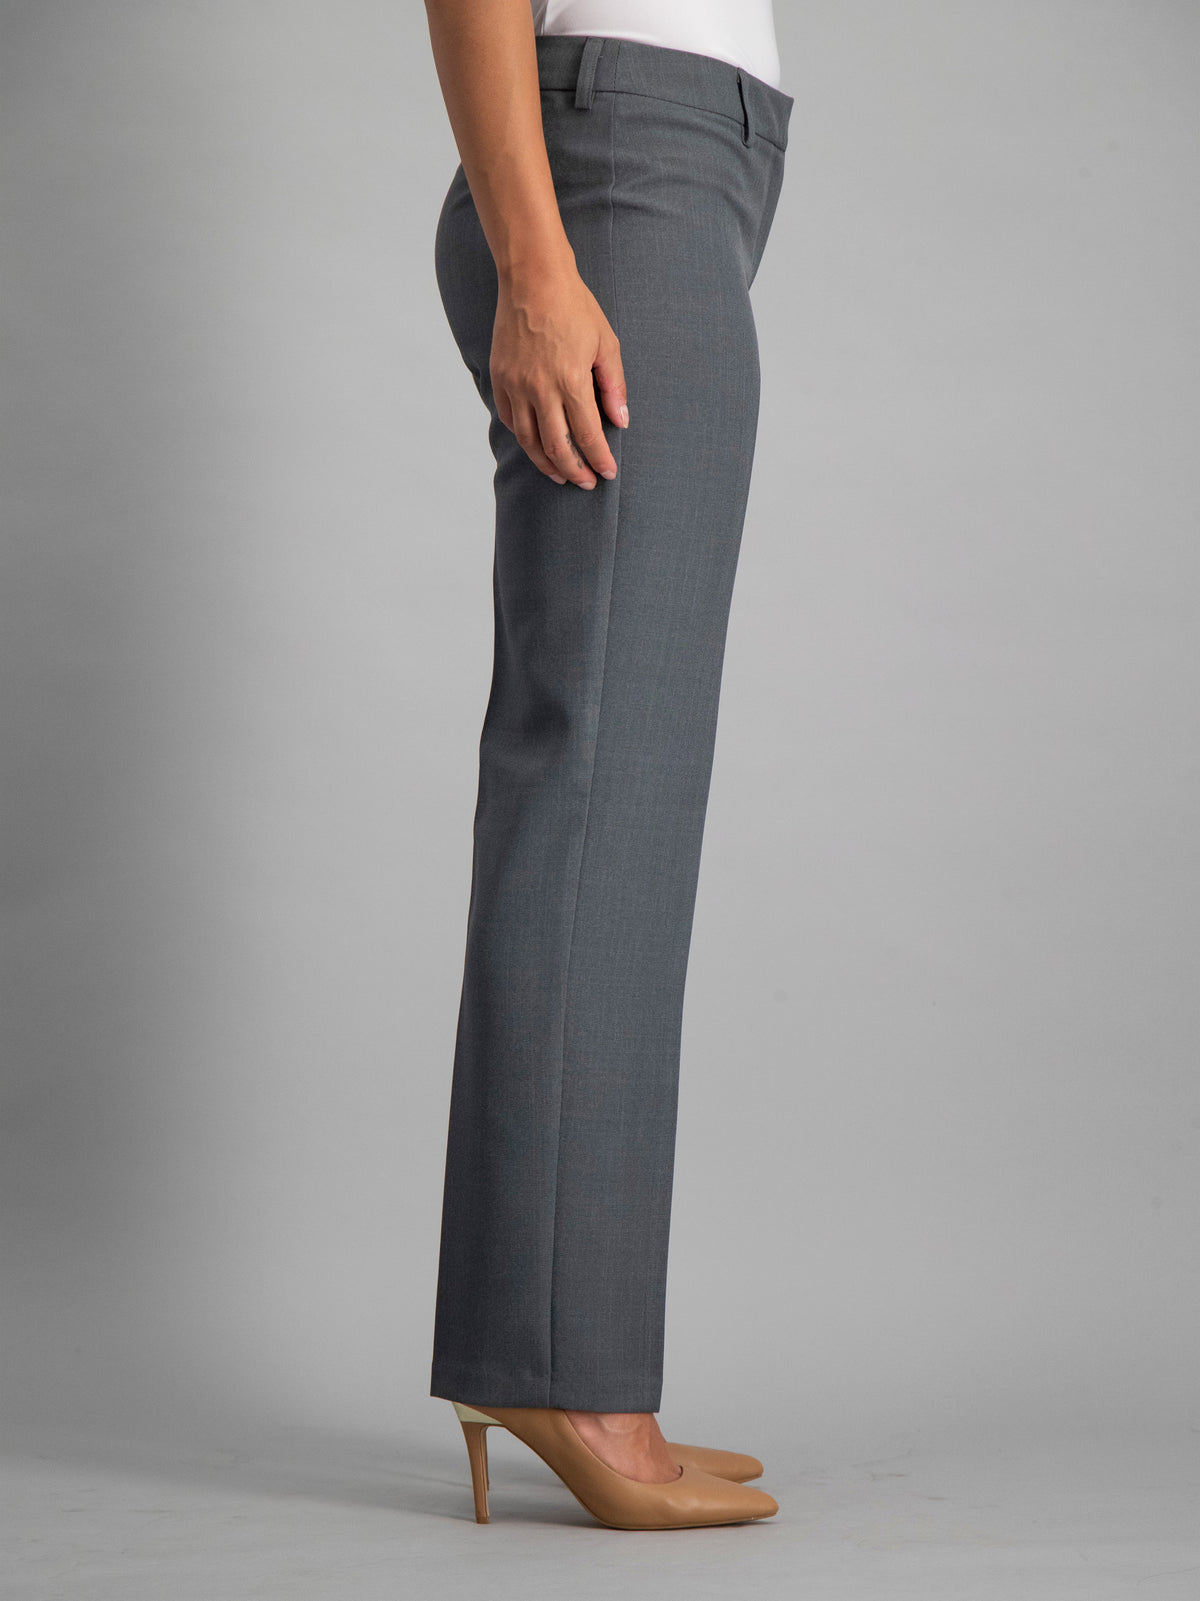 Christine tailored pants - grey